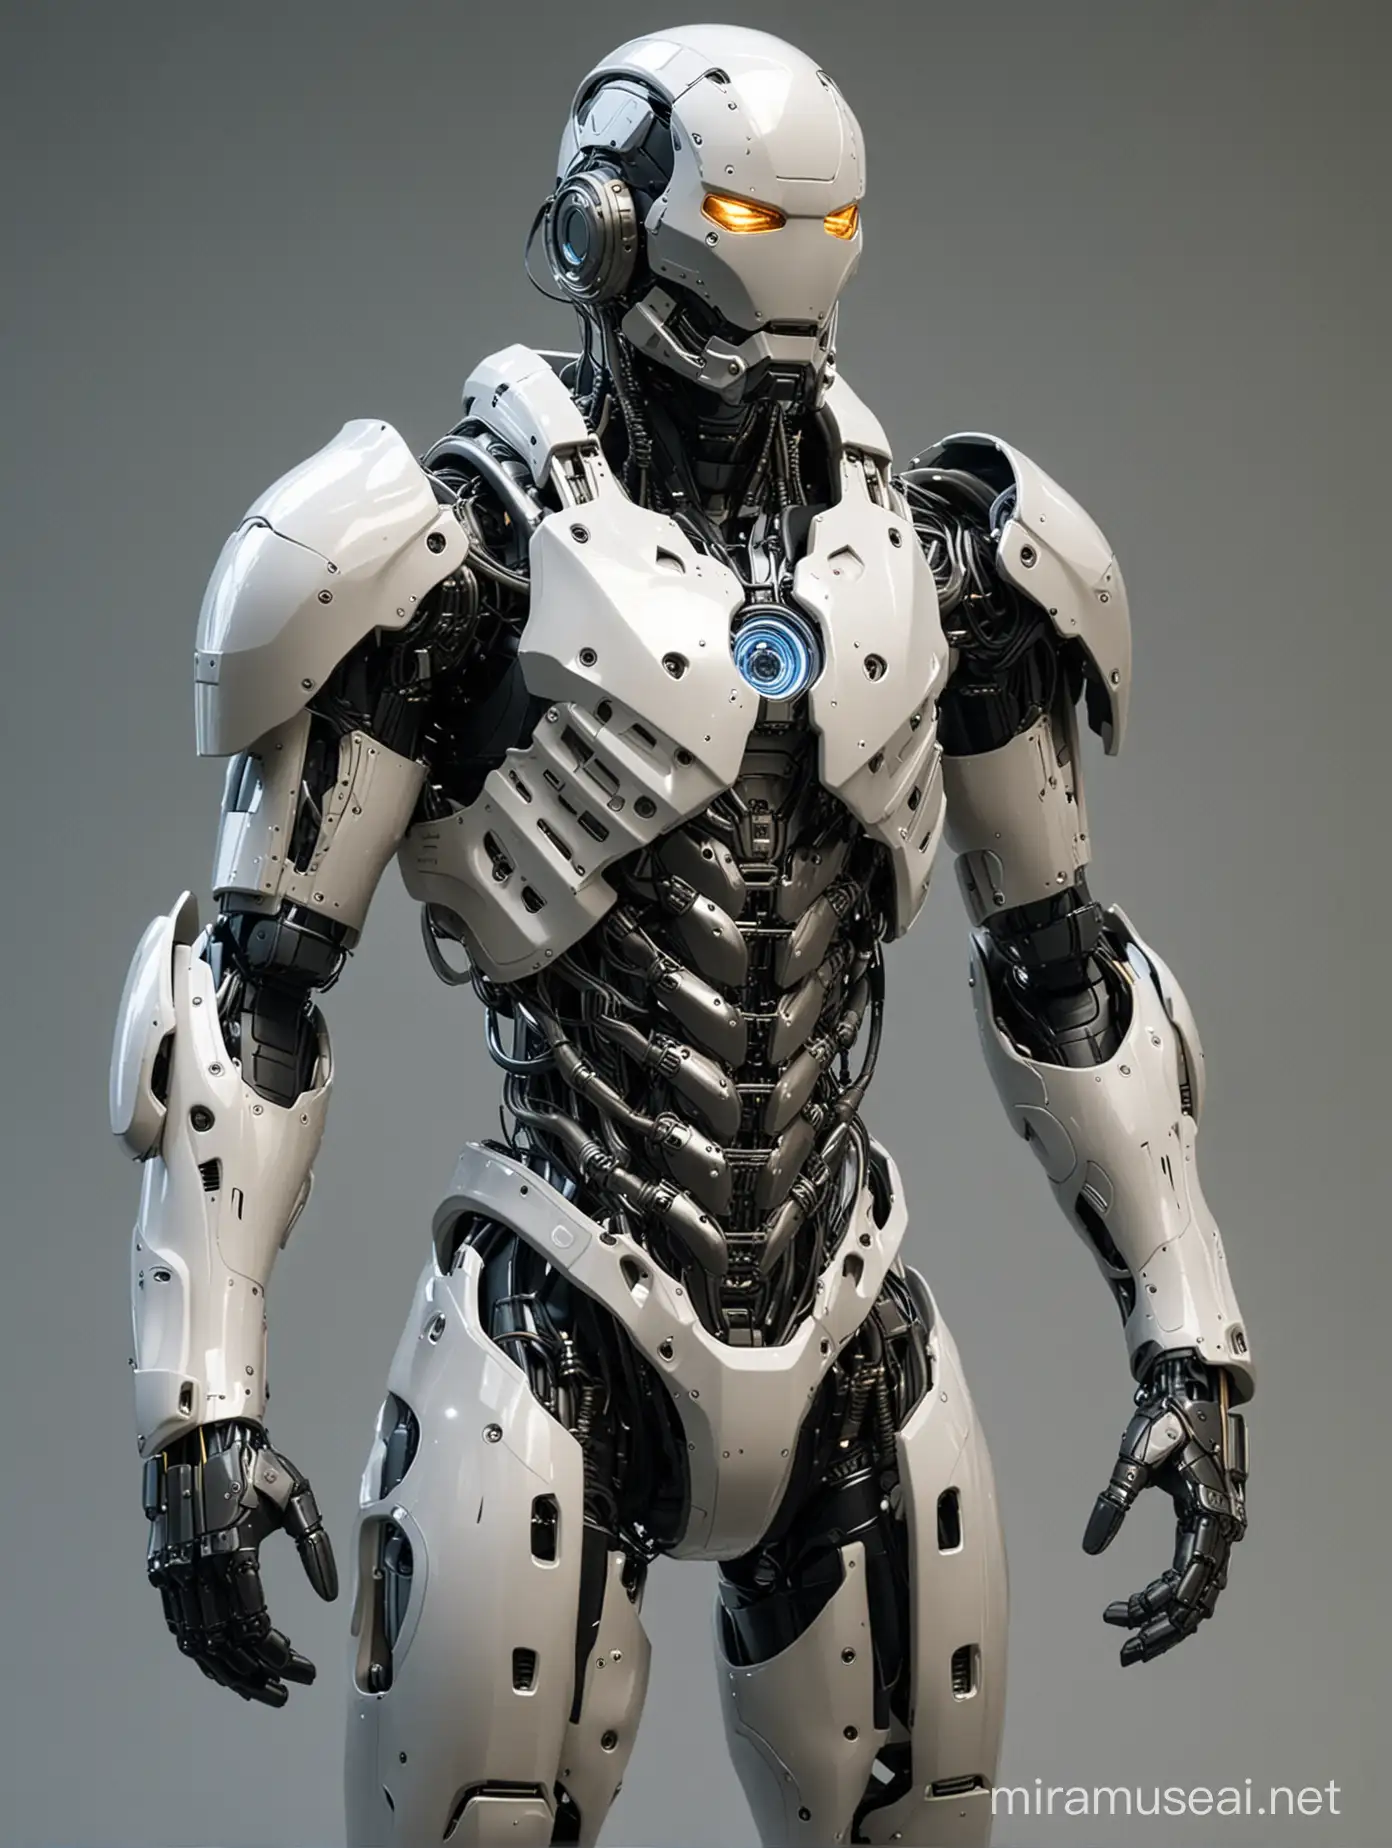 Futuristic ExoSuit Armor Concept for Enhanced Human Capabilities